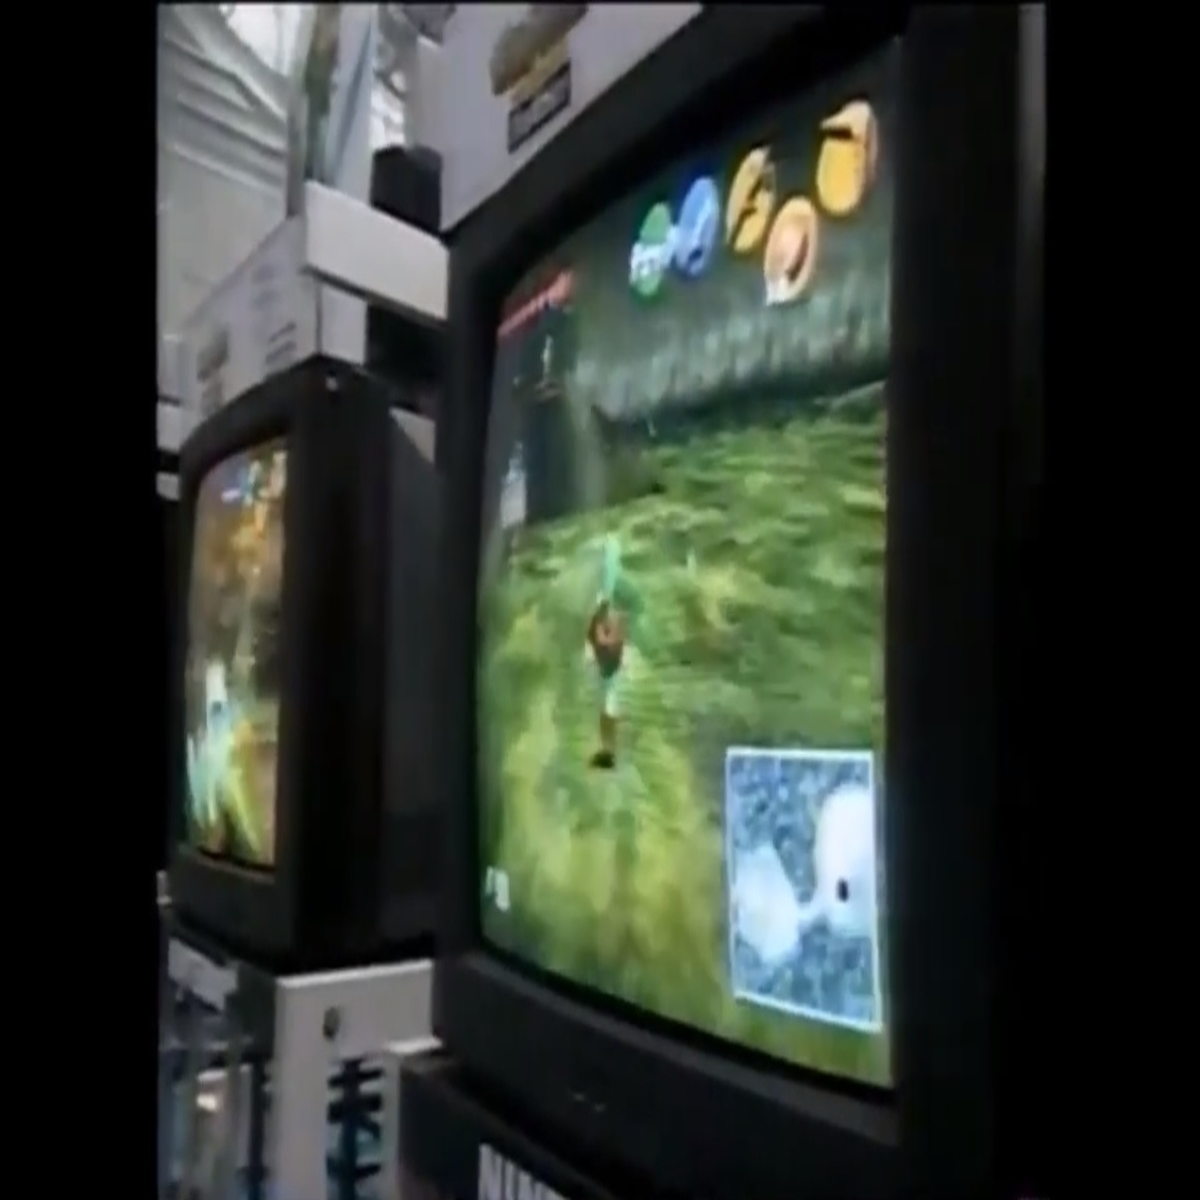 Lost Woods 10 Hours - Zelda Ocarina of Time 